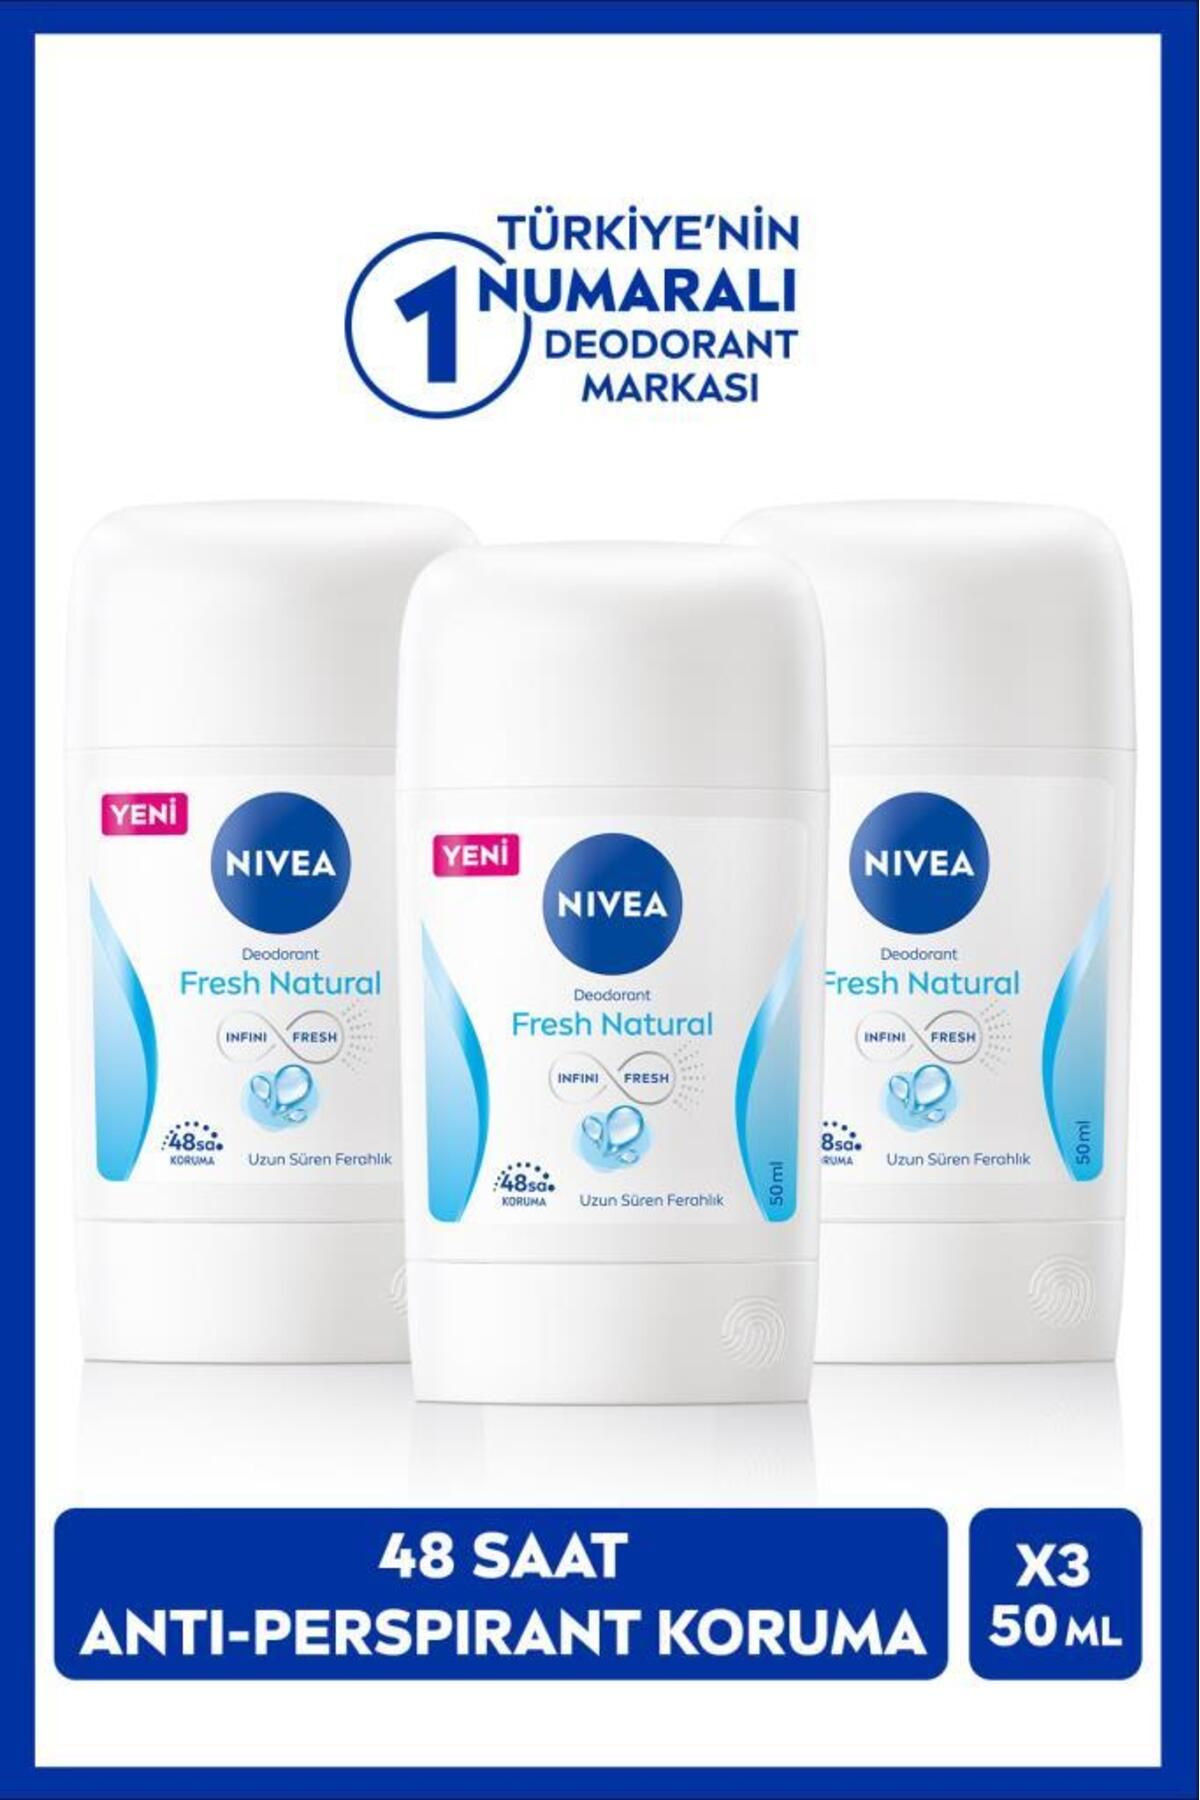 NIVEA Kadın Stick Deodorant Fresh Natural 50ml, 48 Saat Koruma, X3 Adet